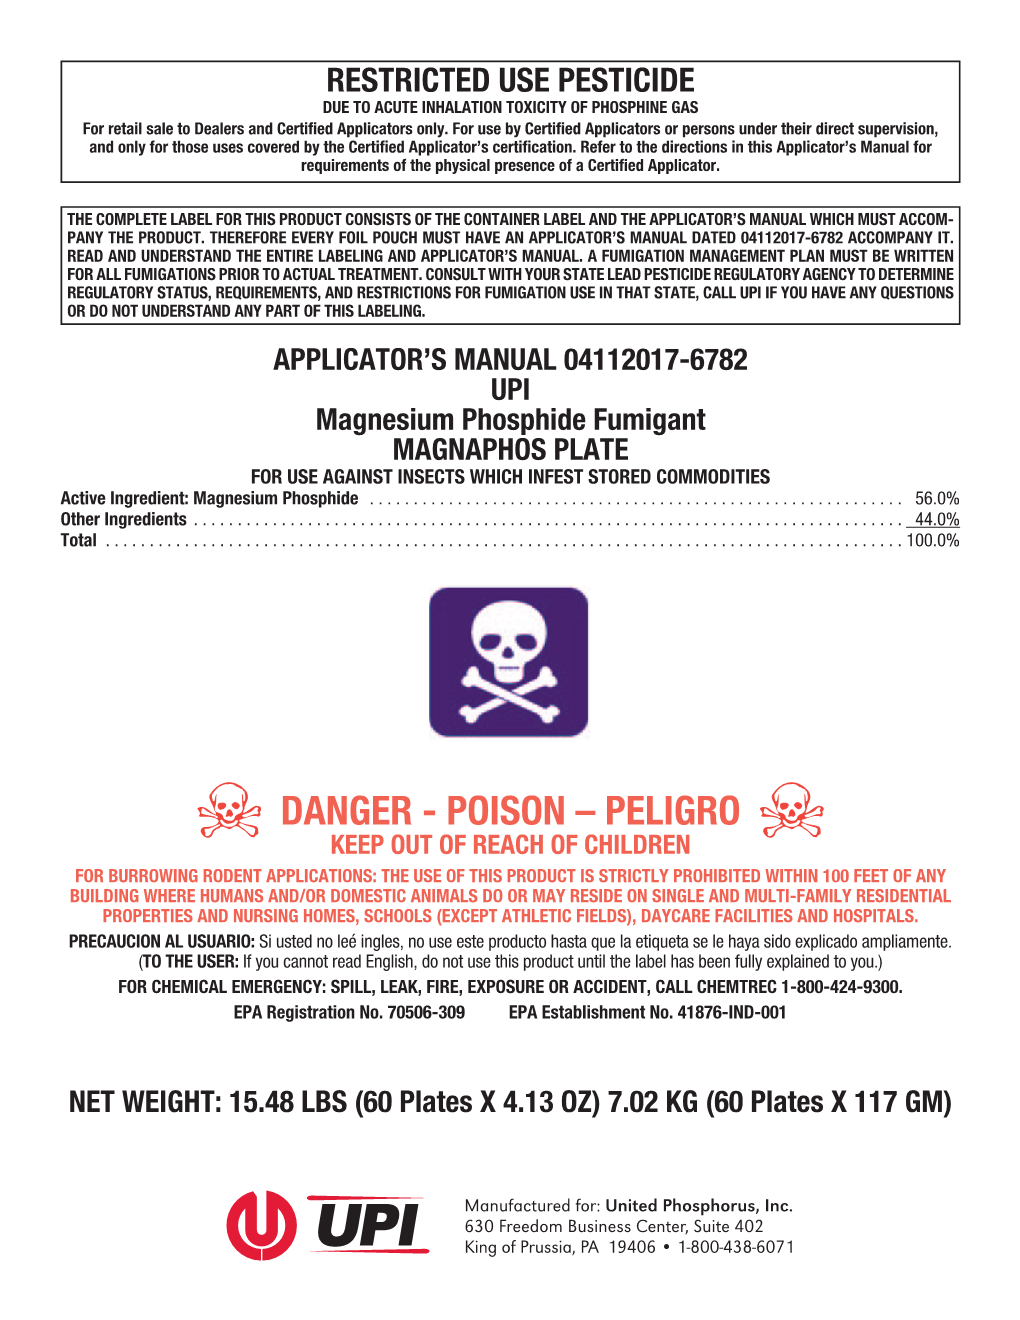 Poison – Peligro